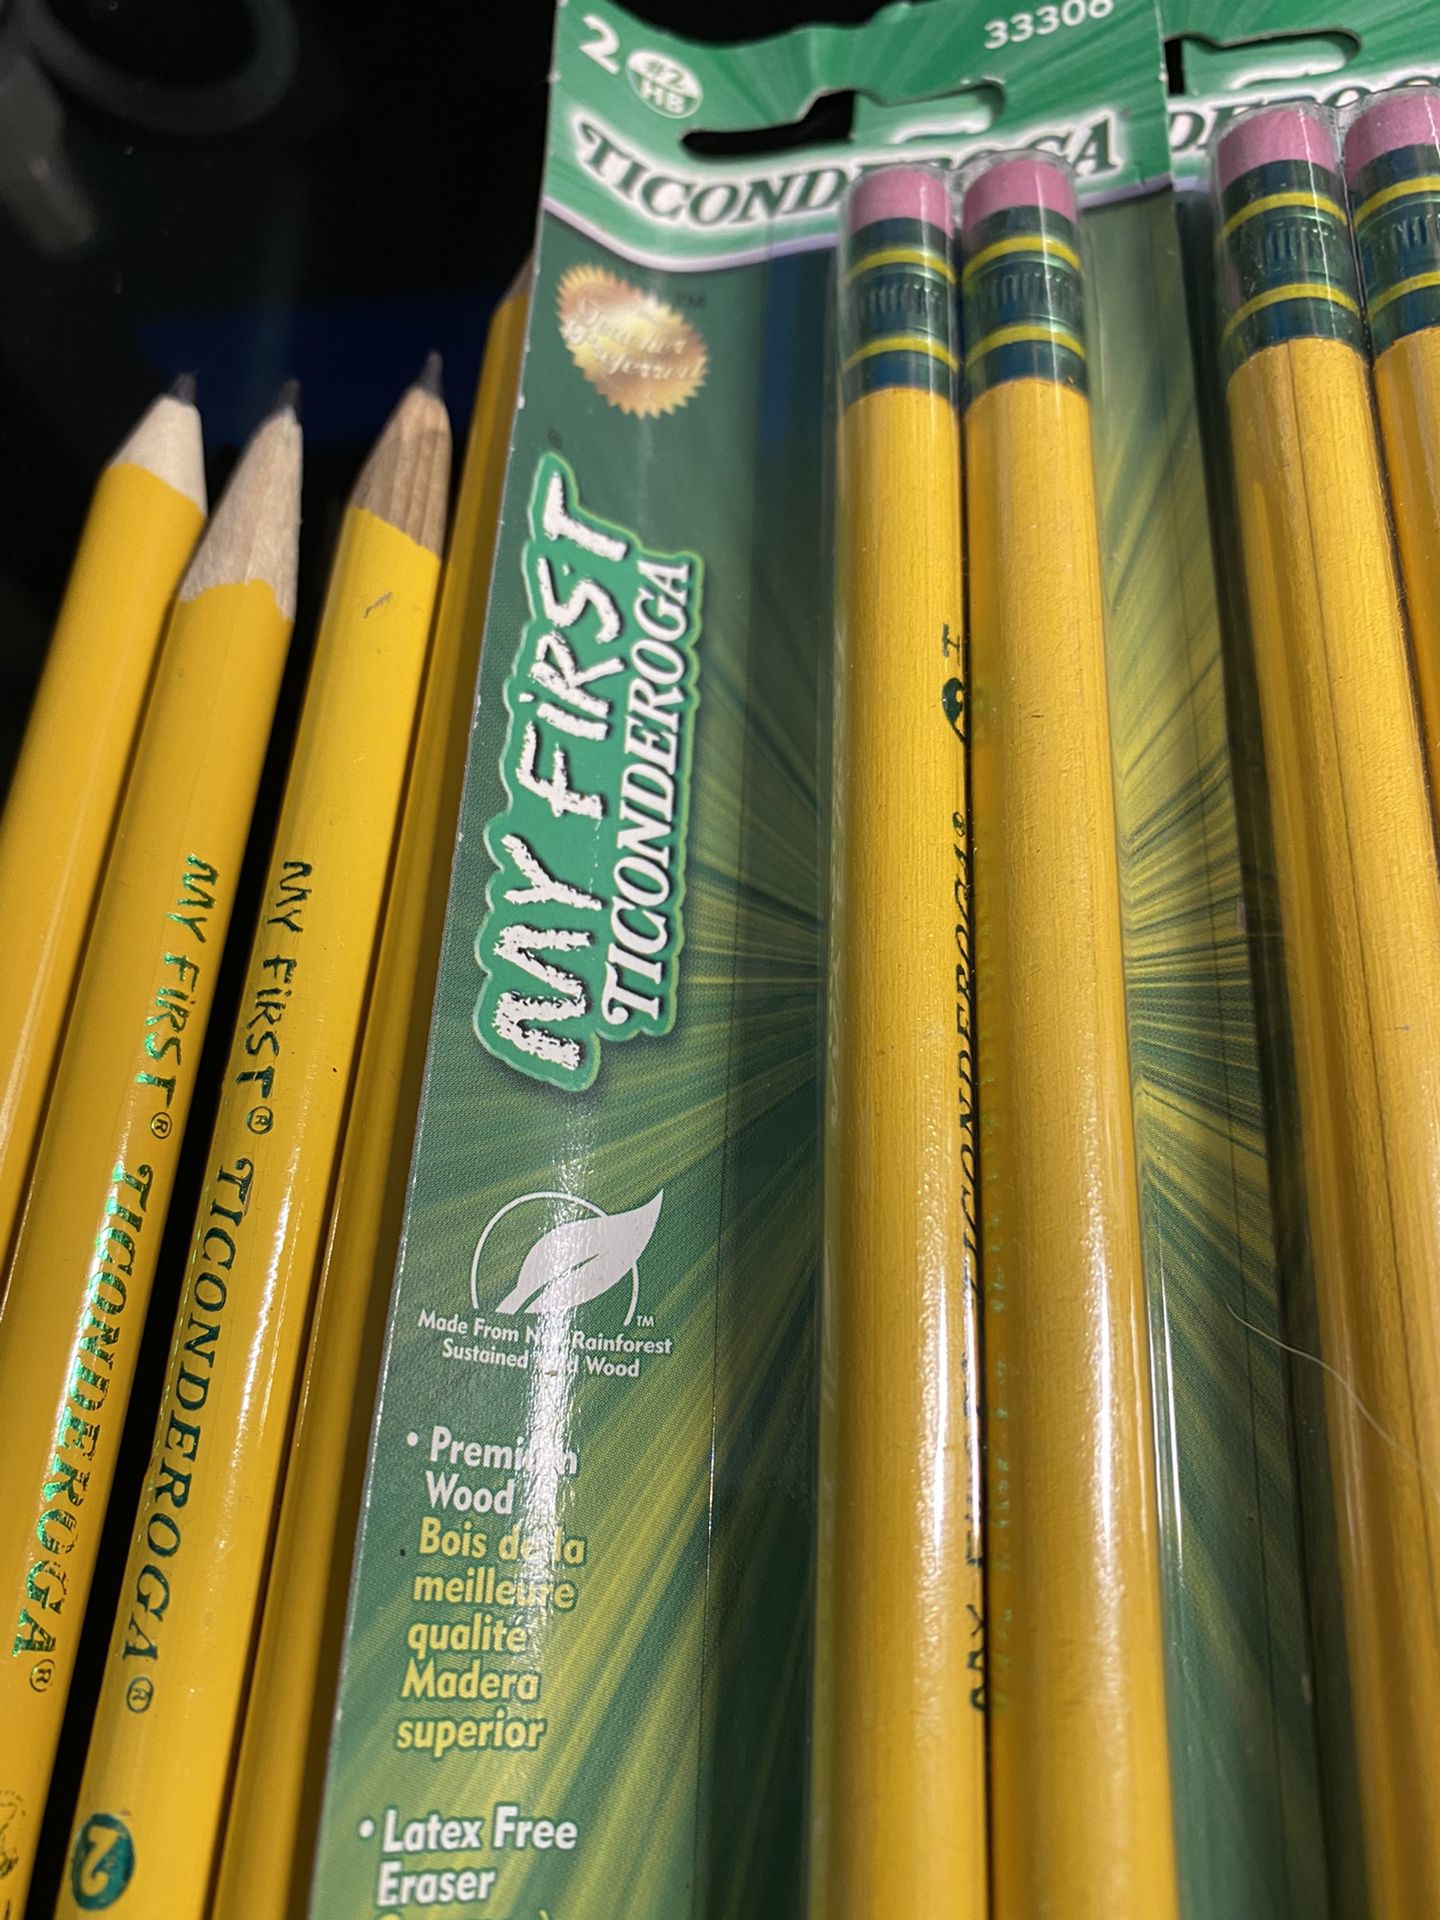 Ticonderoga Pencils (my 1st) kinder